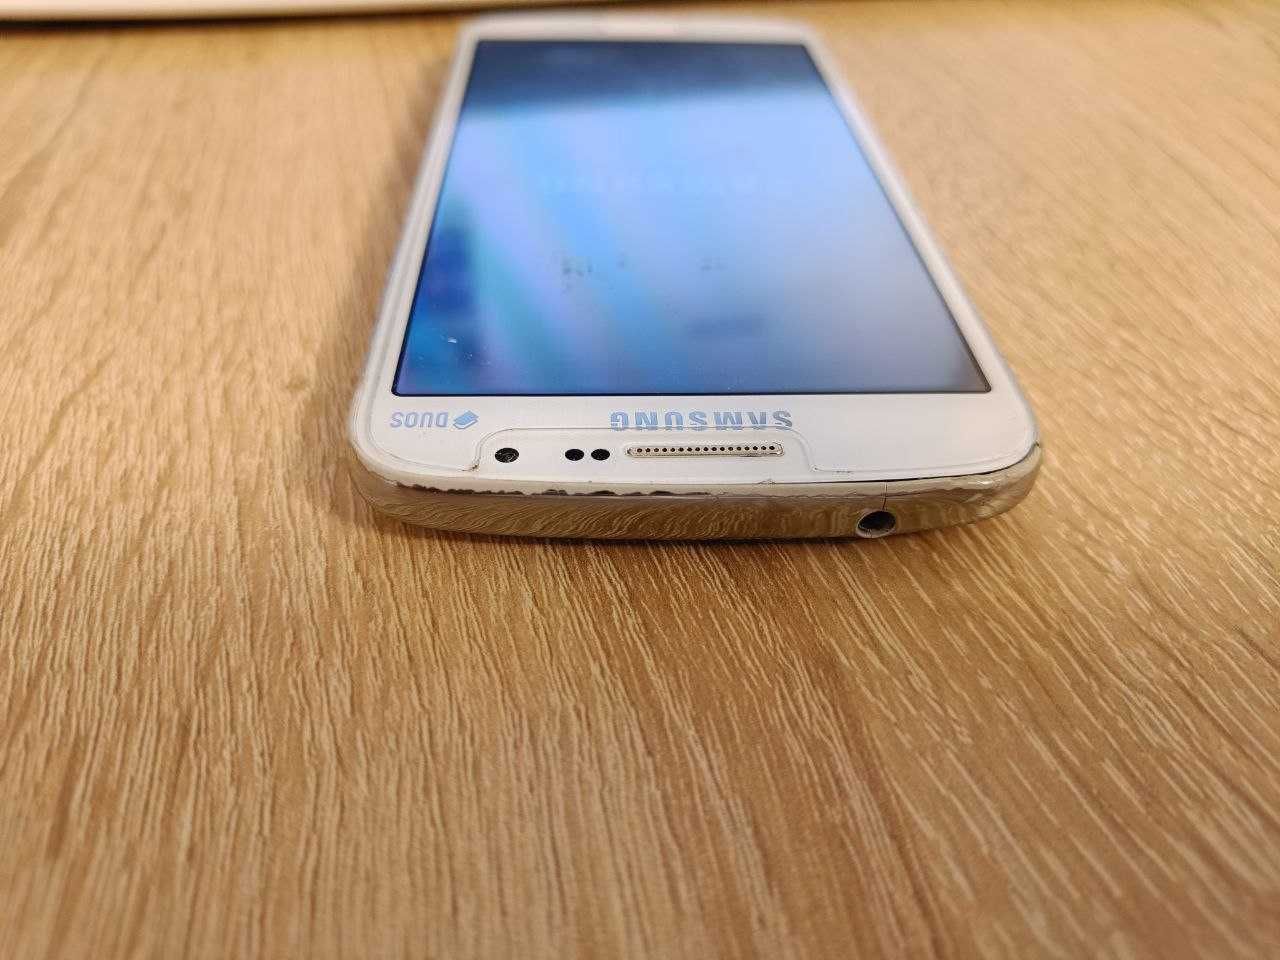 Смартфон  Samsung G7102 Galaxy Grand 2